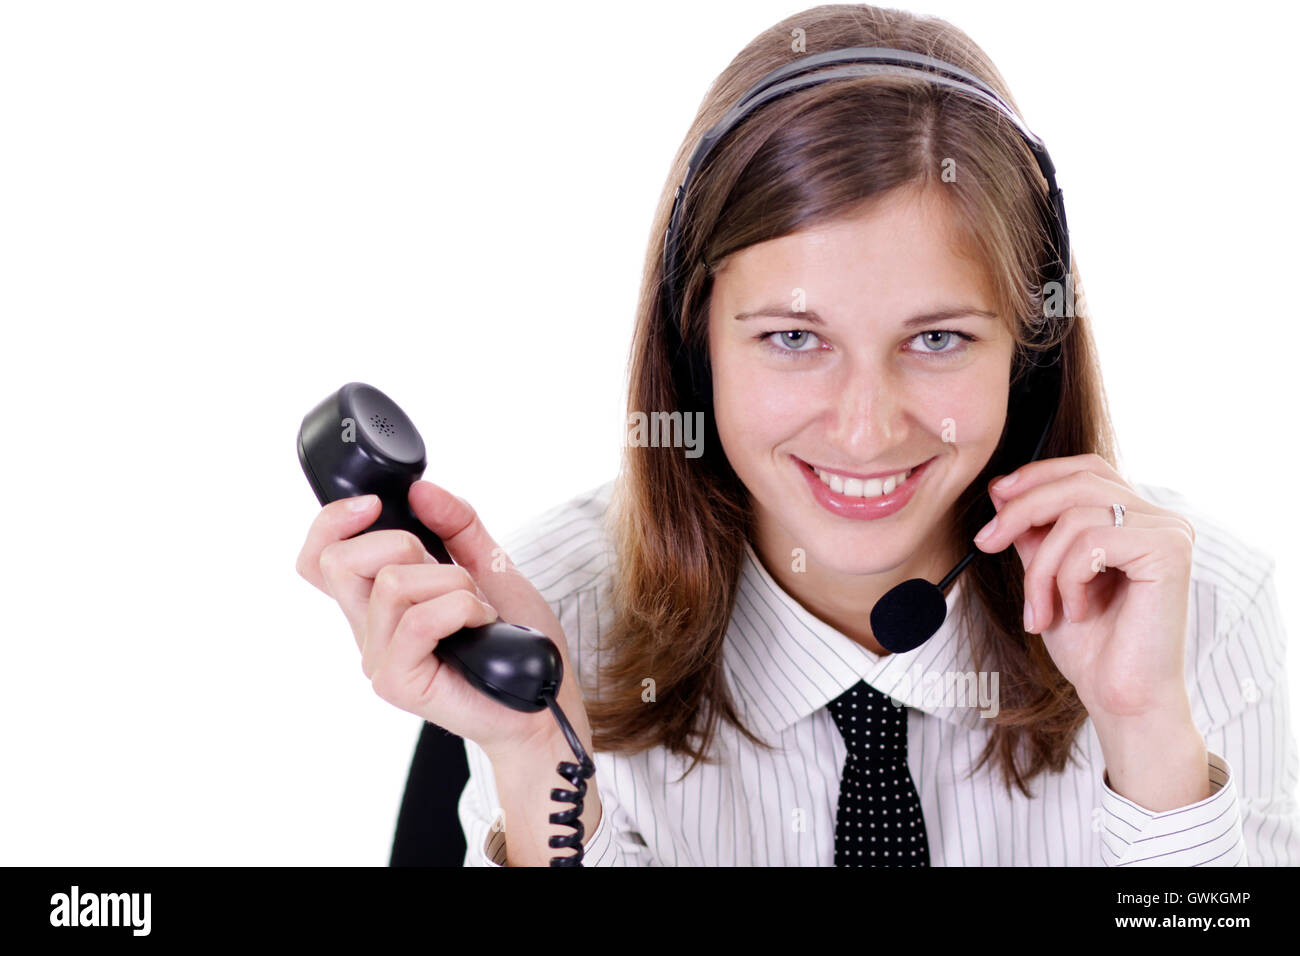 Включи телефон ассистента. Девушка оператор улыбается. Sales Assistant photo face PNG.